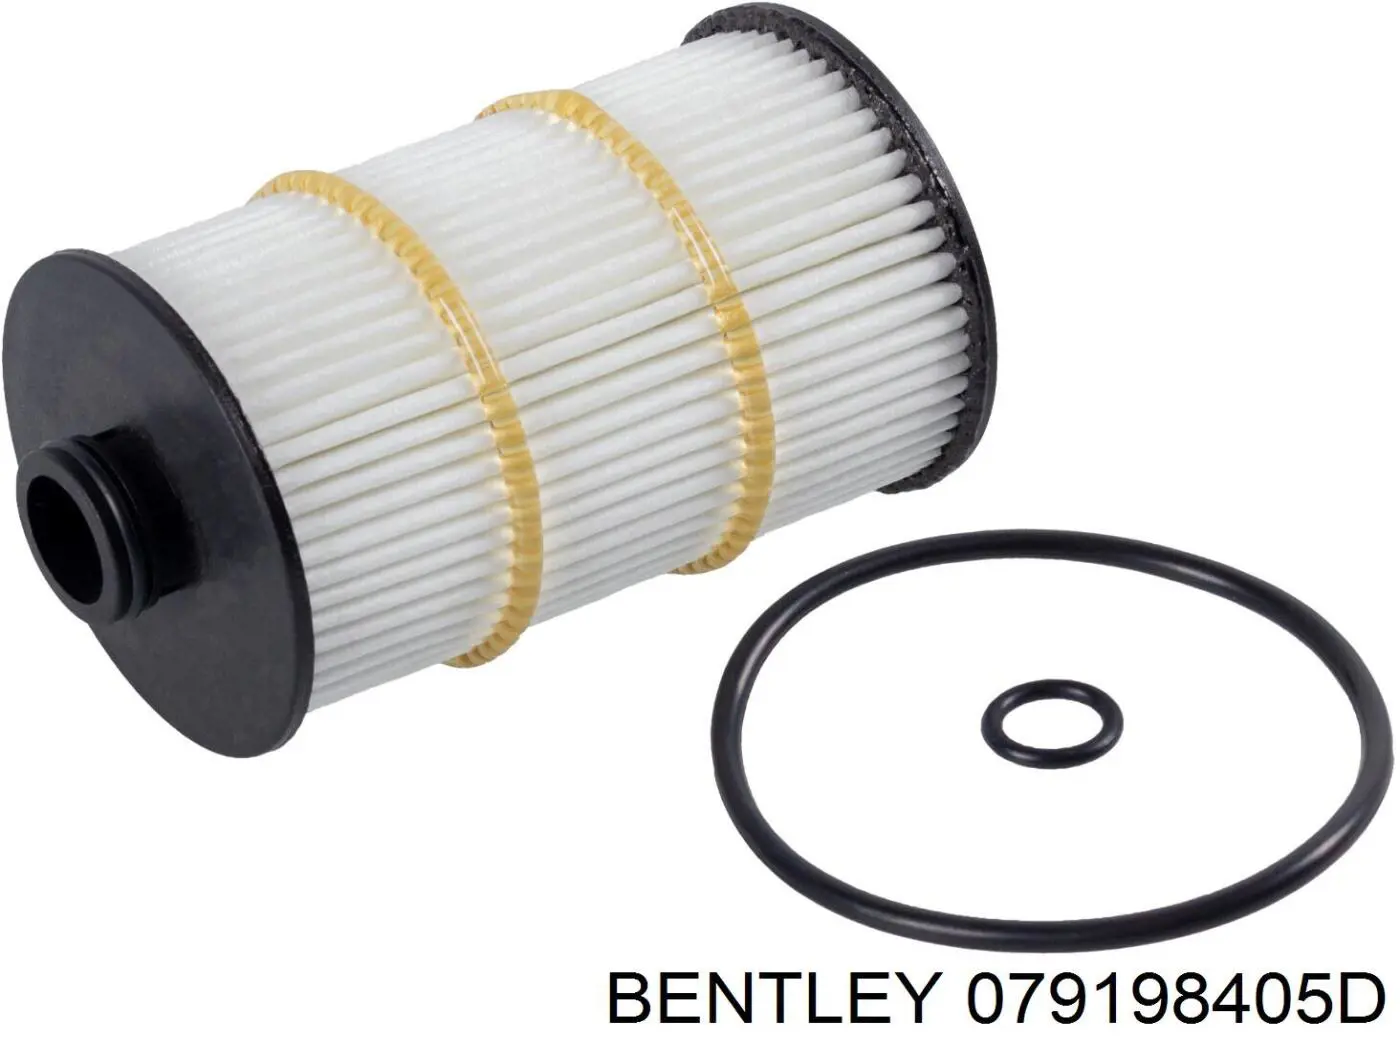 079198405D Bentley filtro de óleo